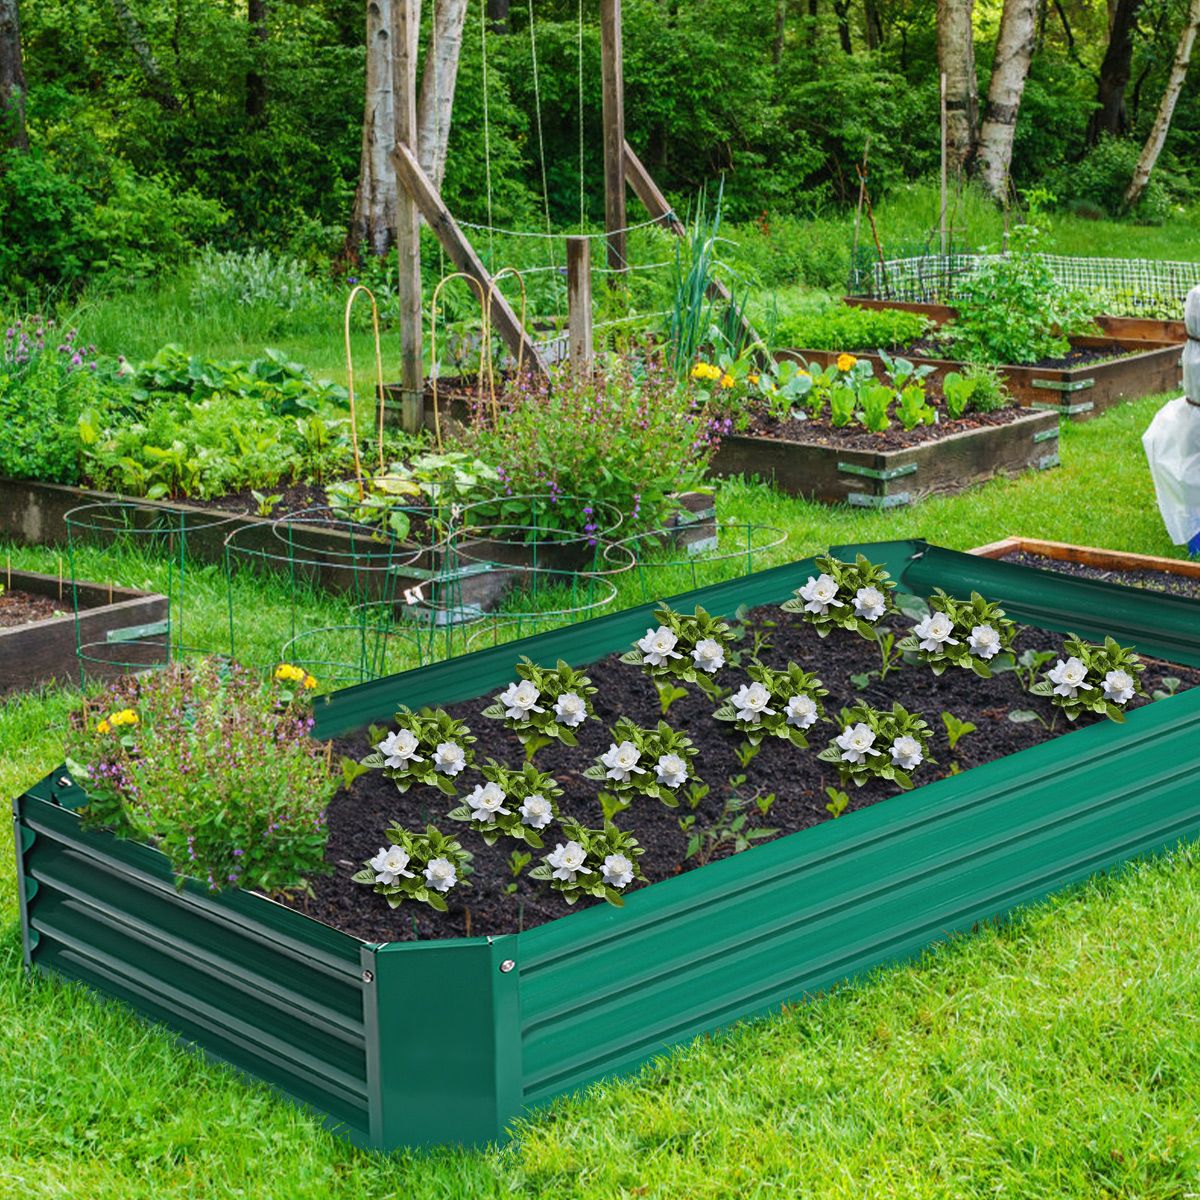 1200x900x300mm-Raised-Steel-Garden-Bed-Planter-Box-Outdoor-Vegetable-Flower-Herbs-Tray-Pot-1711013